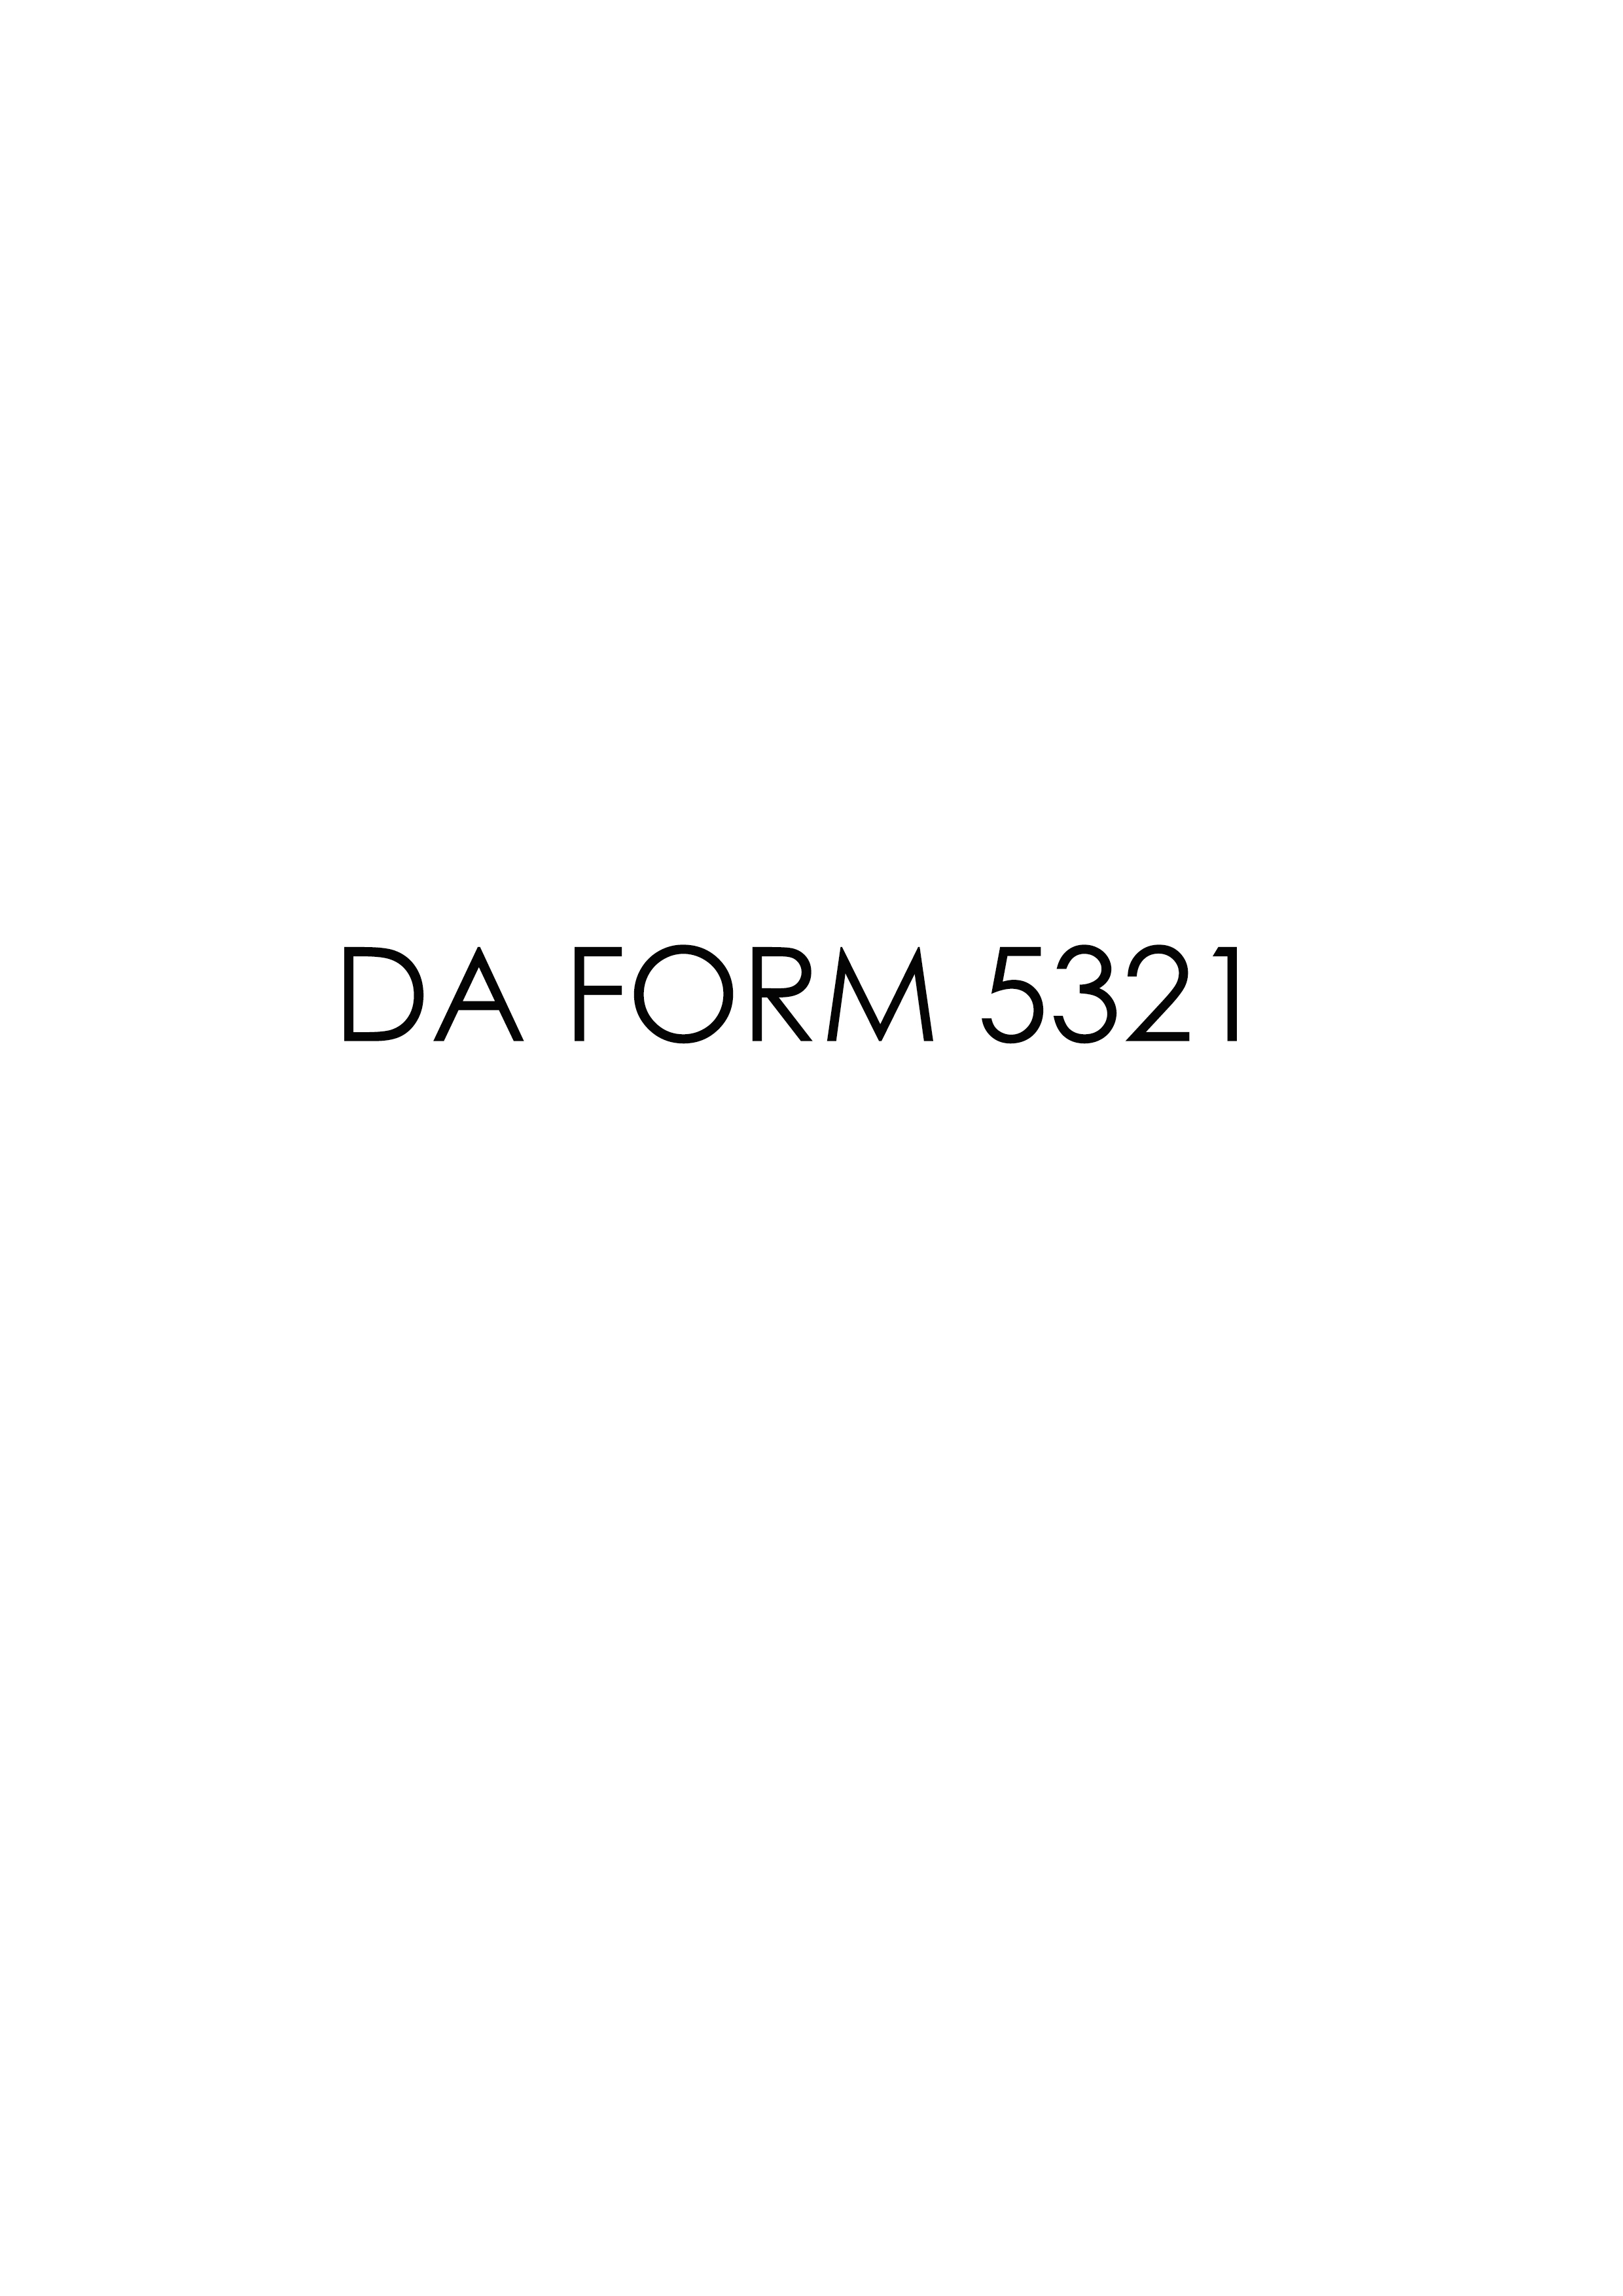 da Form 5321 fillable